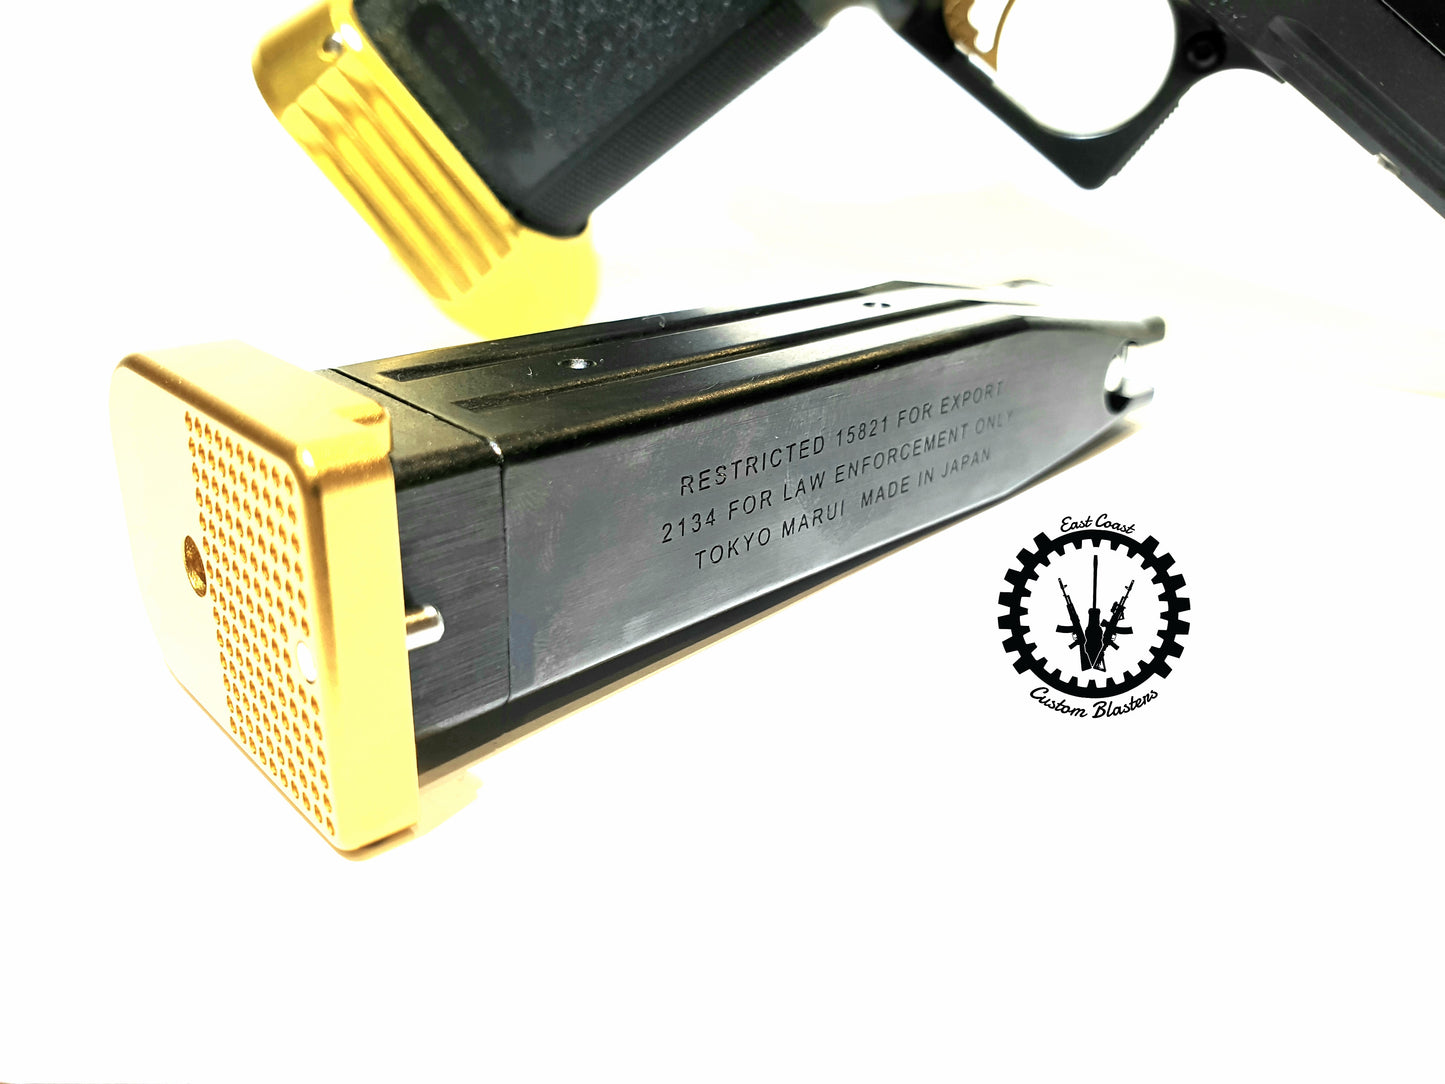 TM Hi-Capa 5.1 Gold Match GBB Gel Blaster